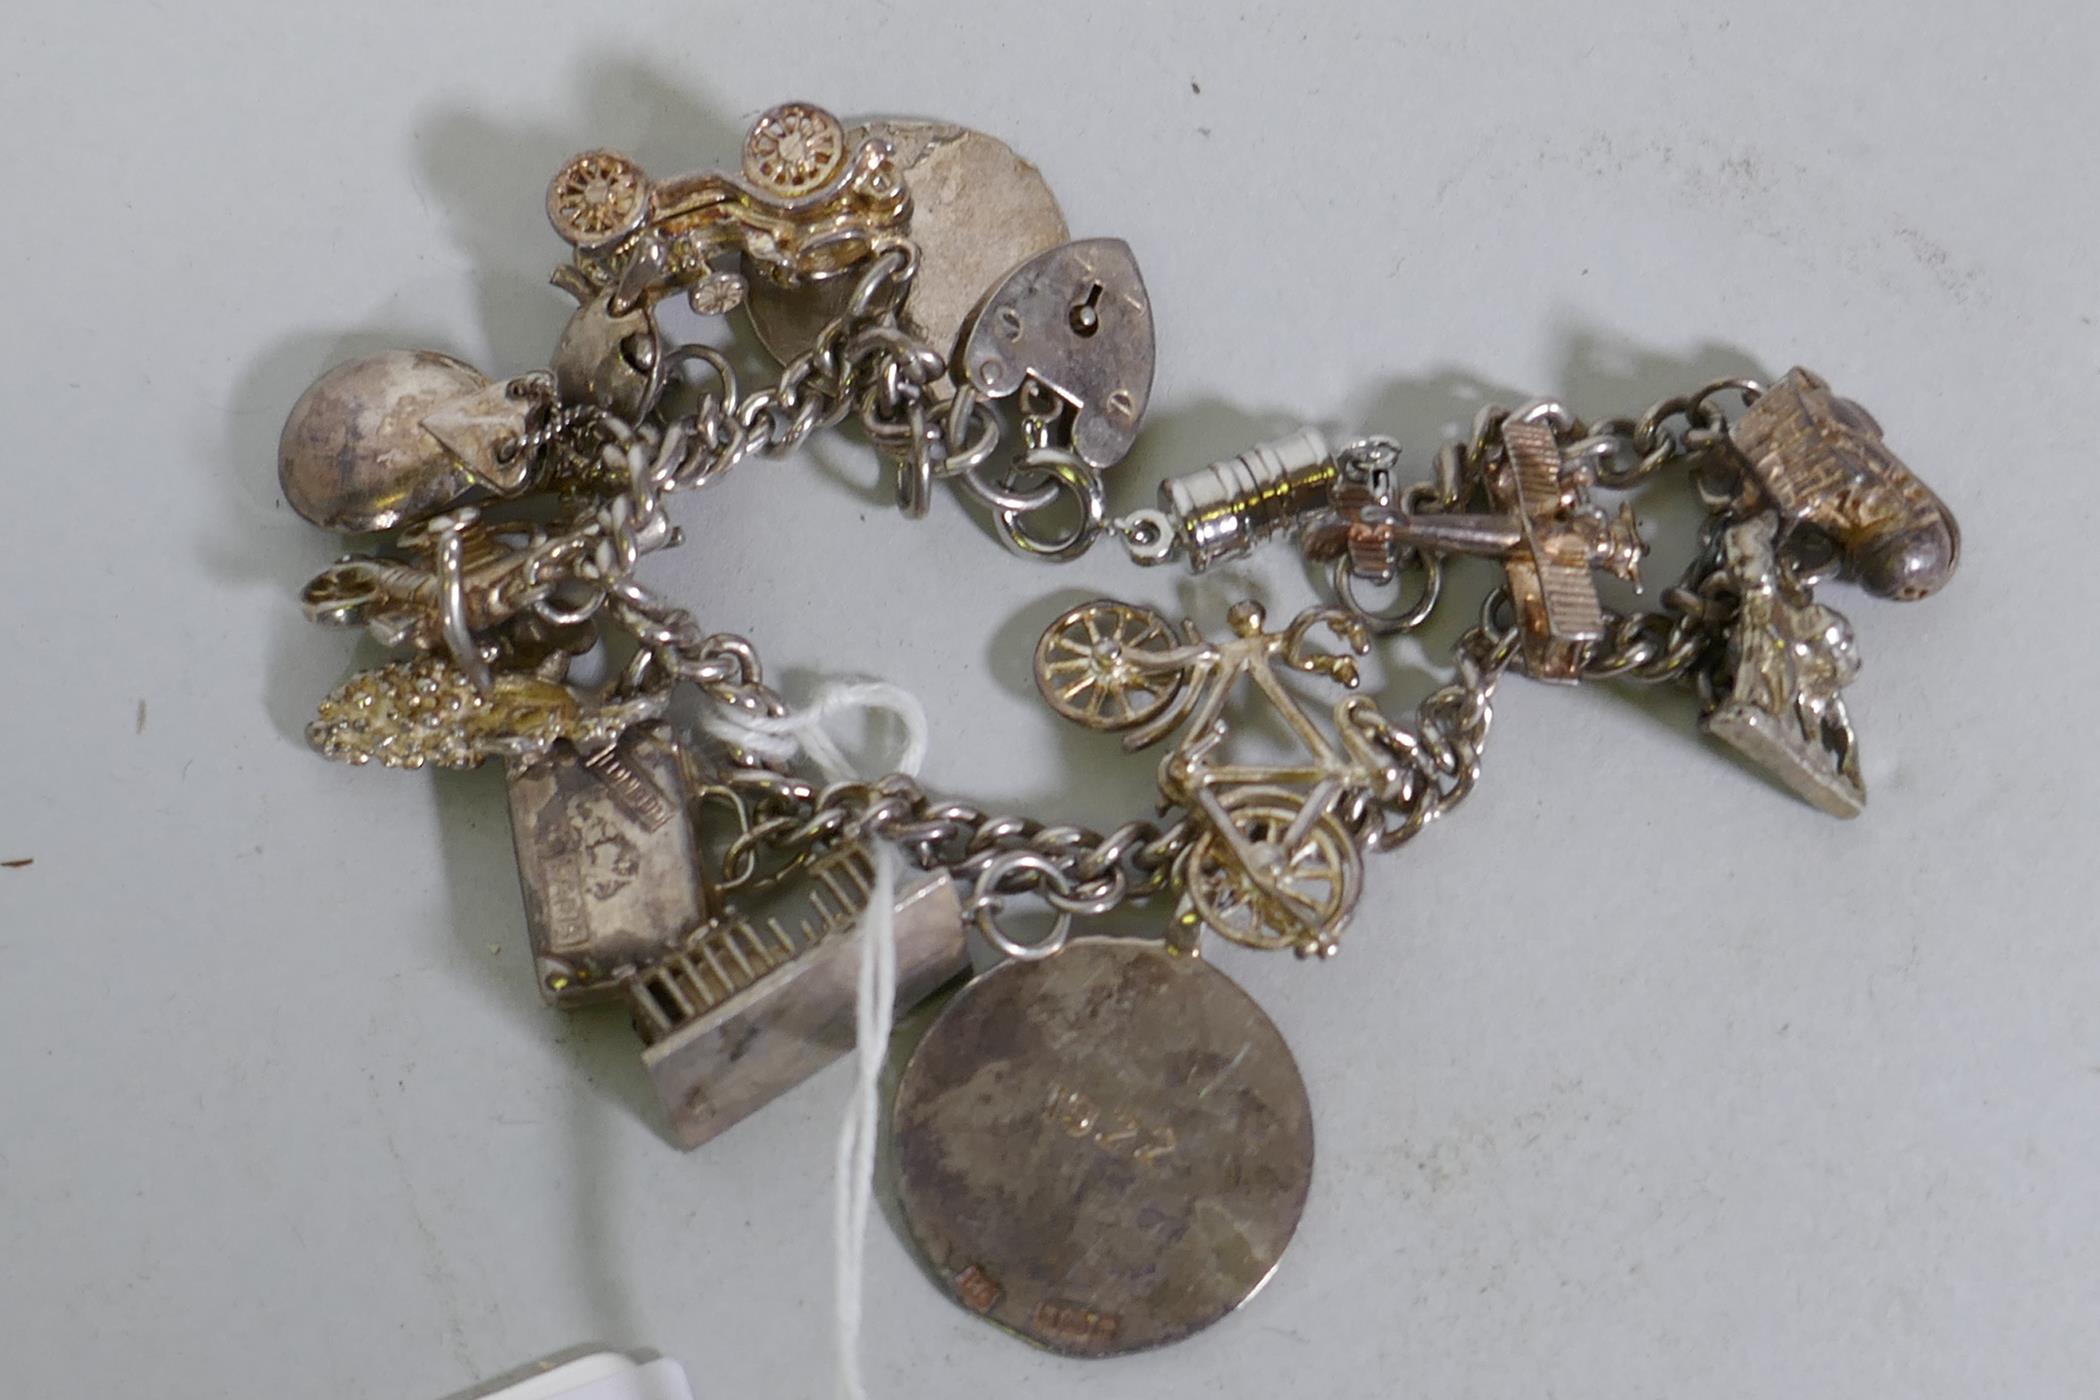 A silver charm bracelet, 48g